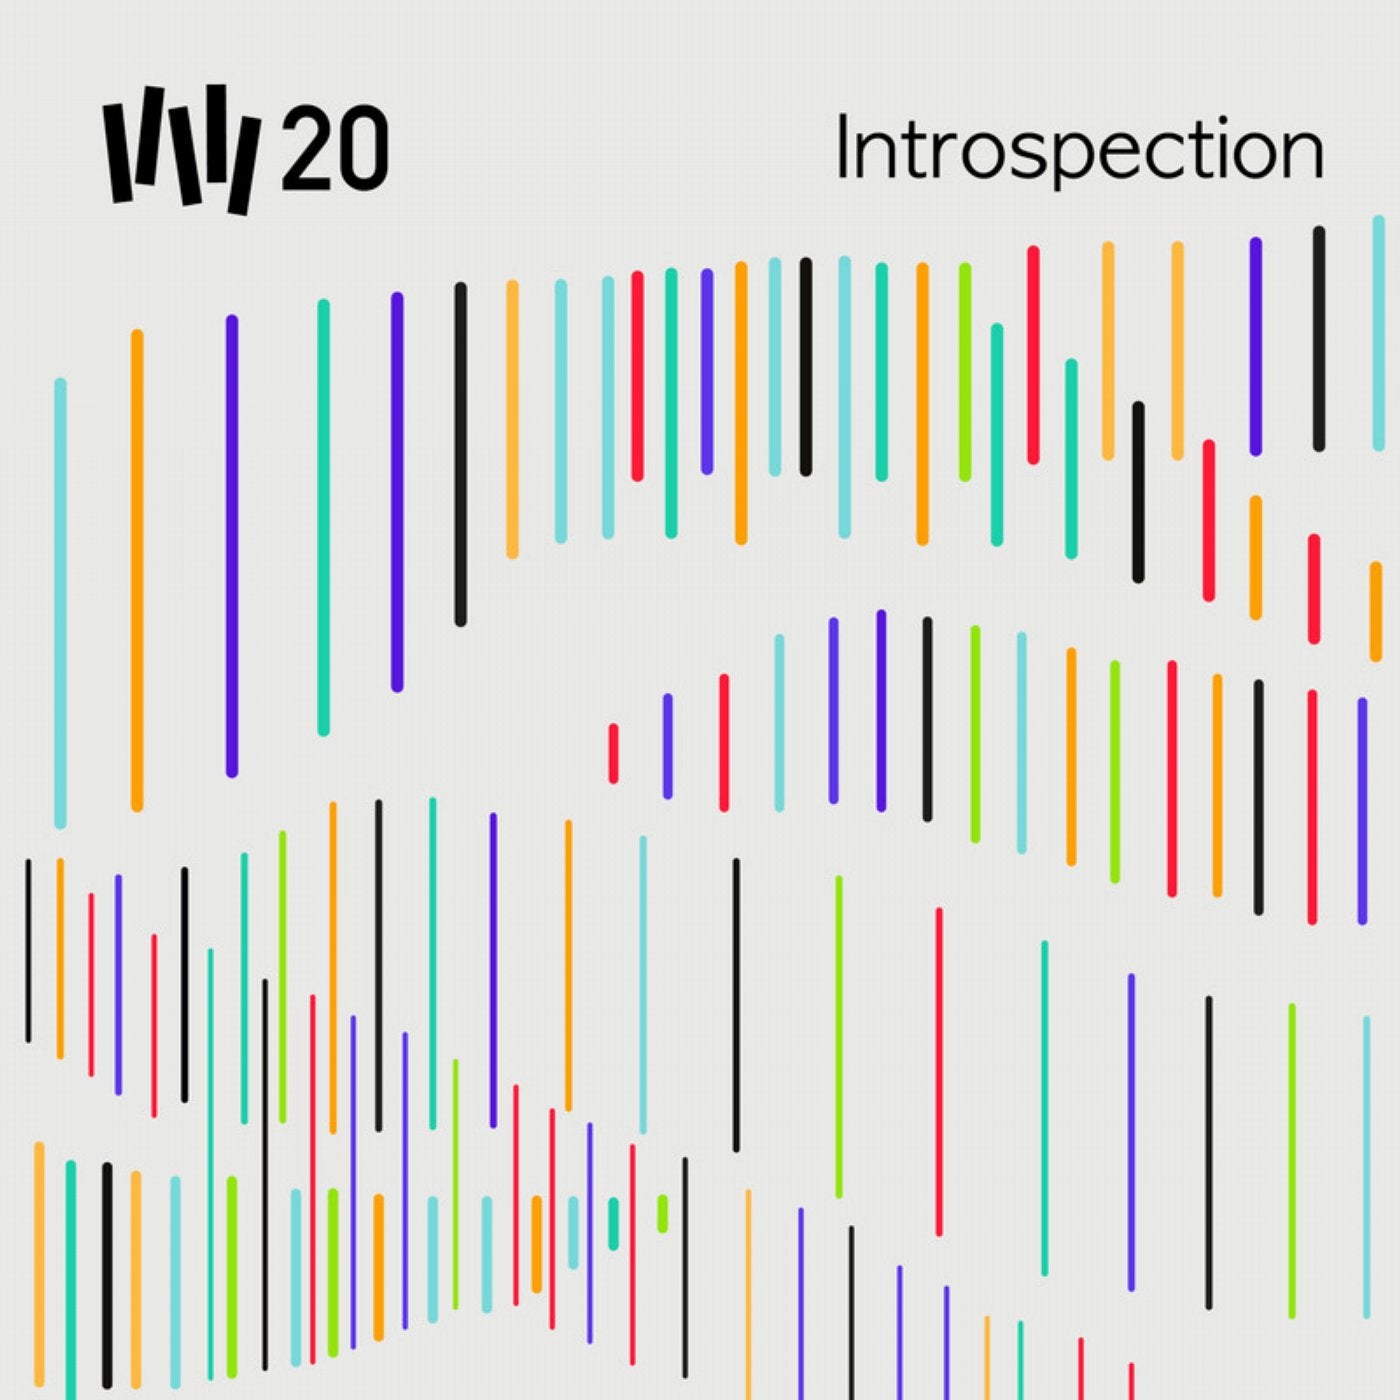 VW20 : Introspection - Volume 5